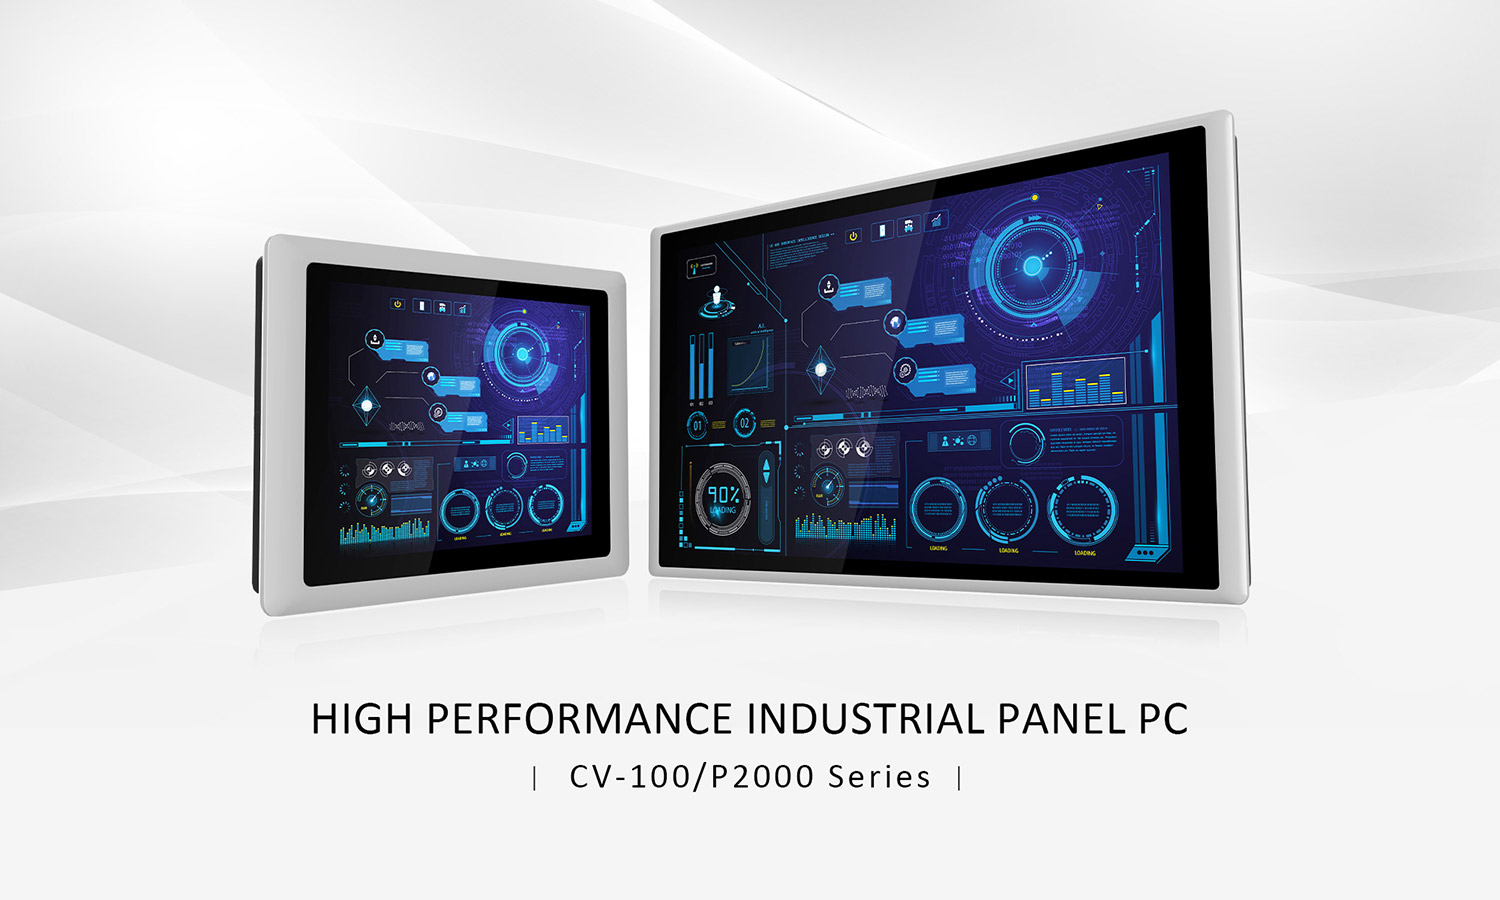 High Performance Industrial Panel PC (CV-100/P2000 Series)